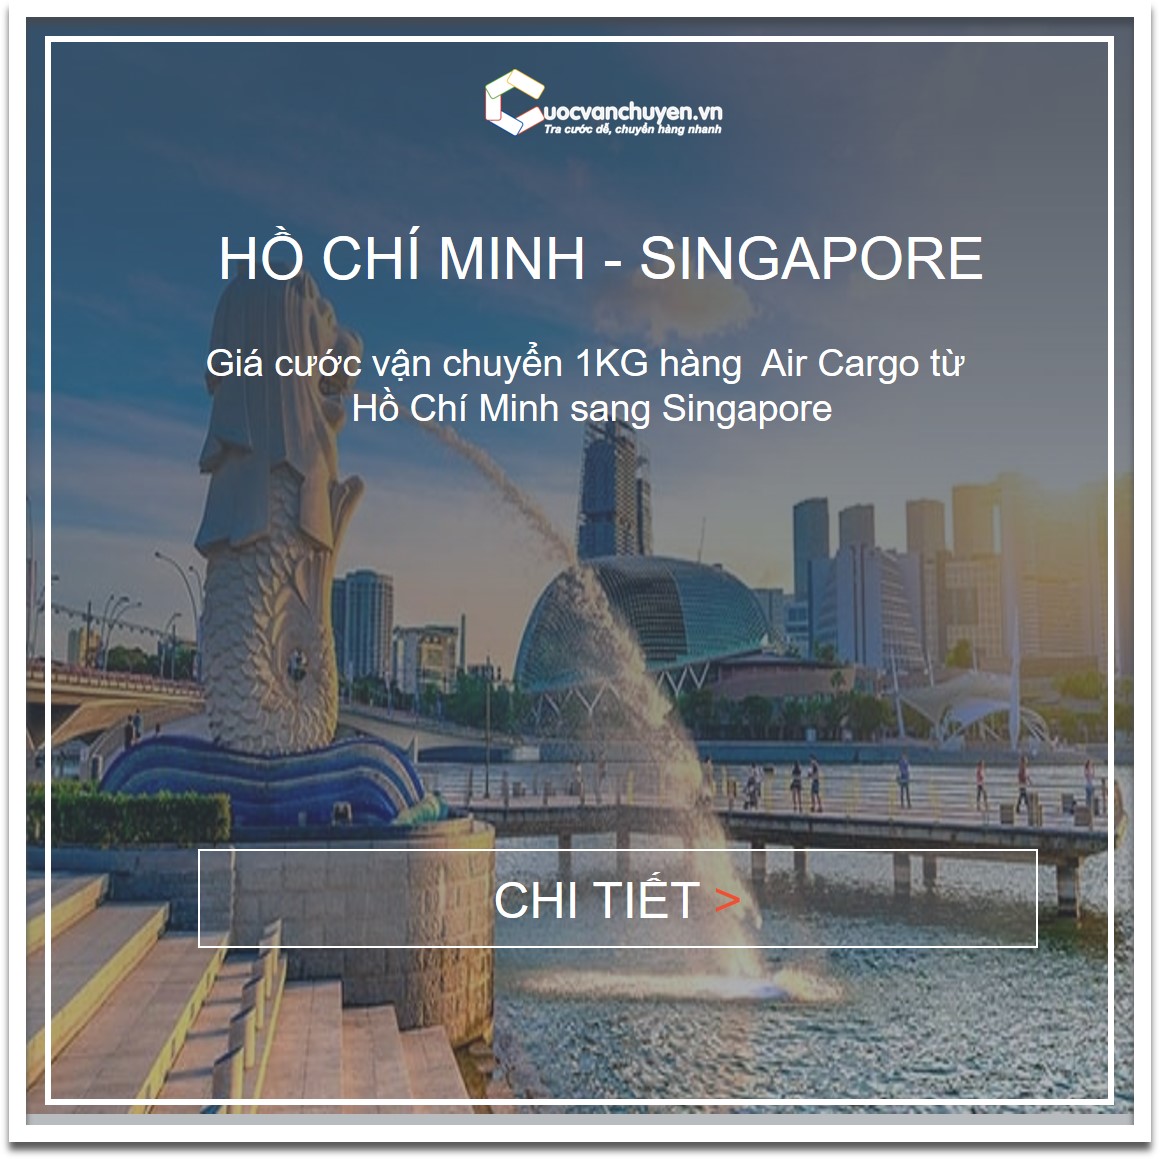 Gia-cuoc-van-chuyen-air-cargo-tu-Hochiminh-sang-Singapore_cuocvanchuyen_vn.jpg